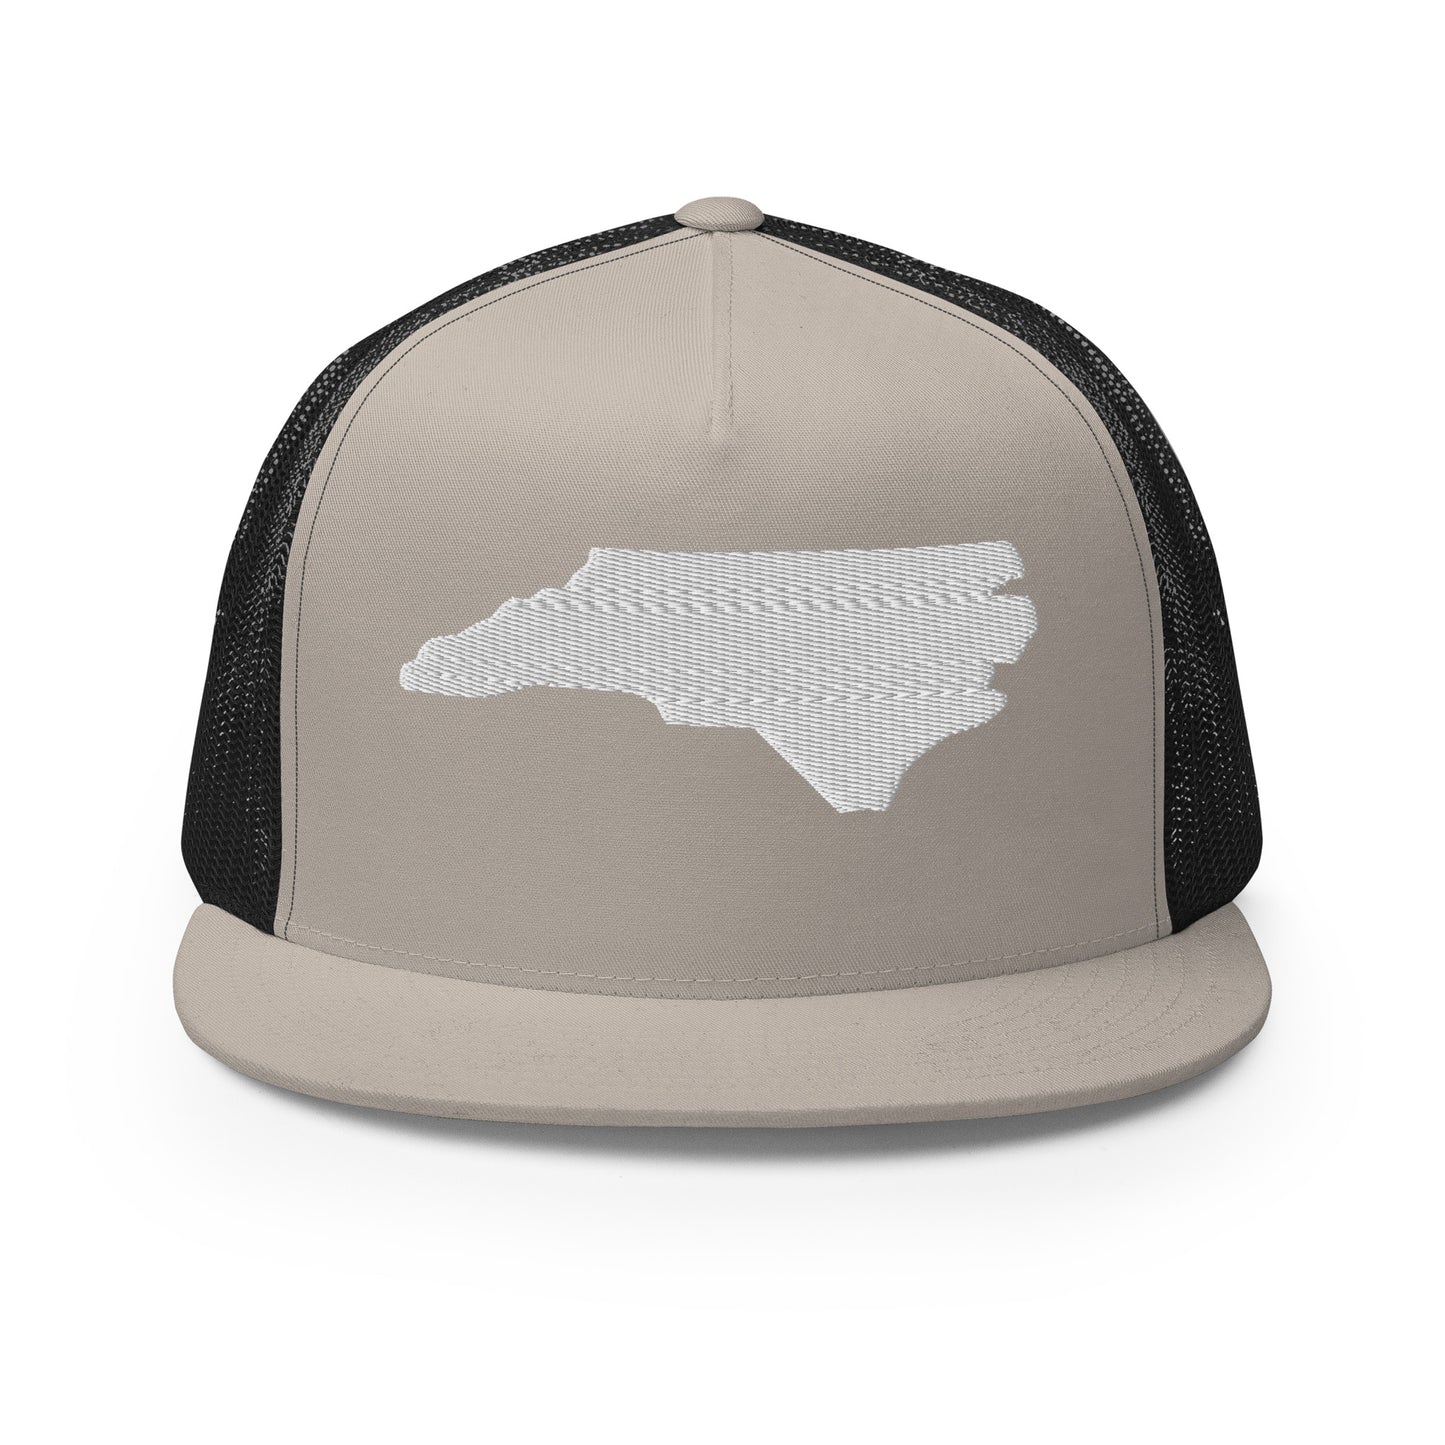 North Carolina State Silhouette High 5 Panel A-Frame Snapback Trucker Hat